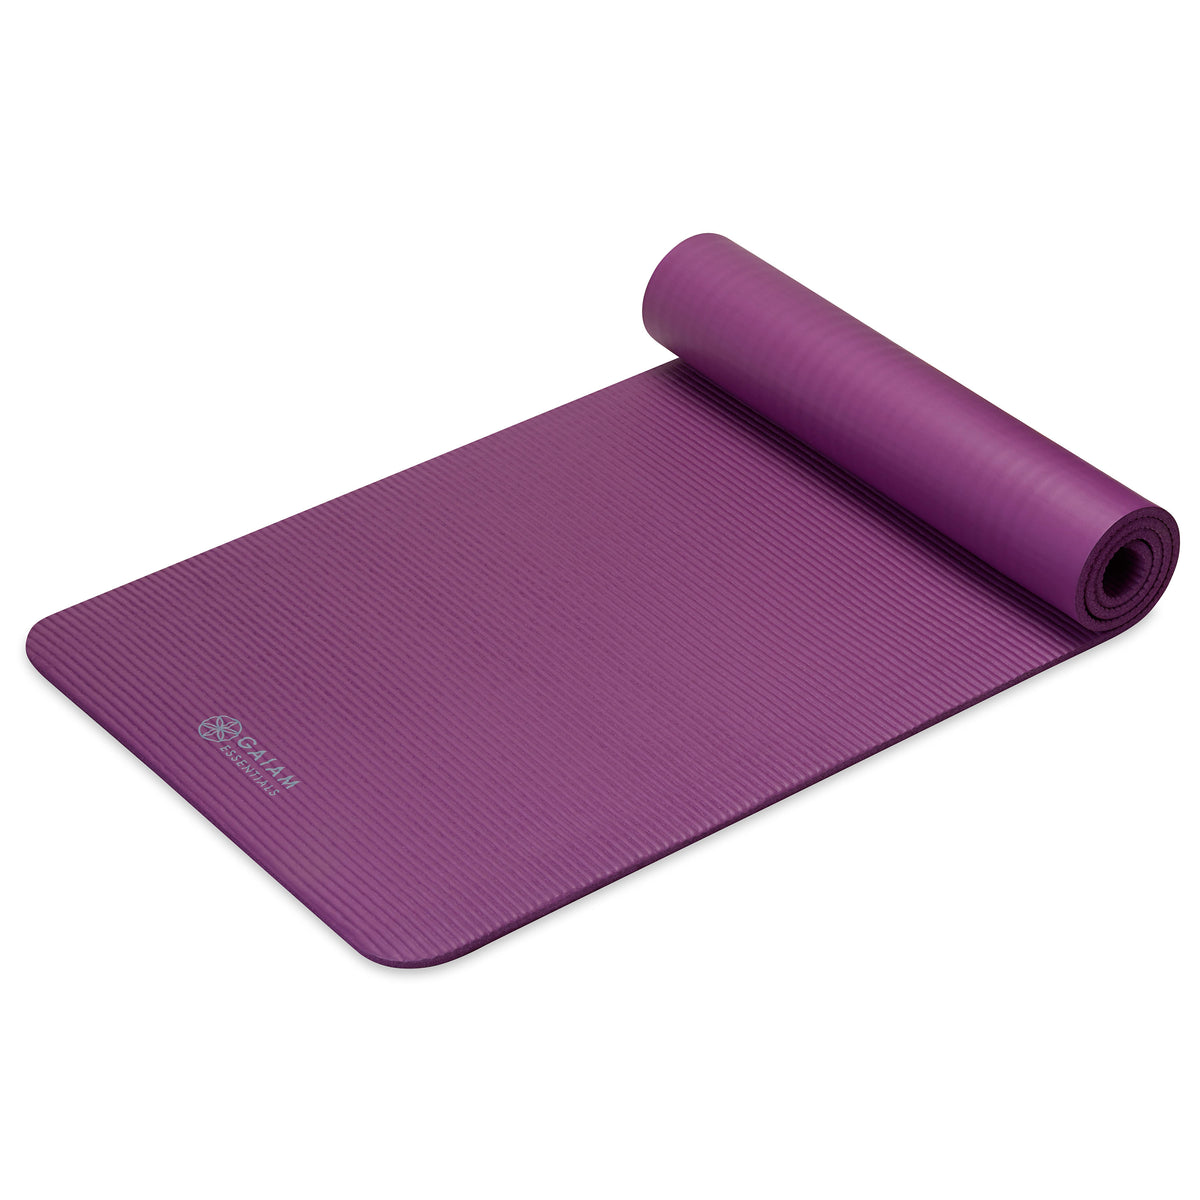 Gaiam Essentials 10mm Thick yoga mat Green